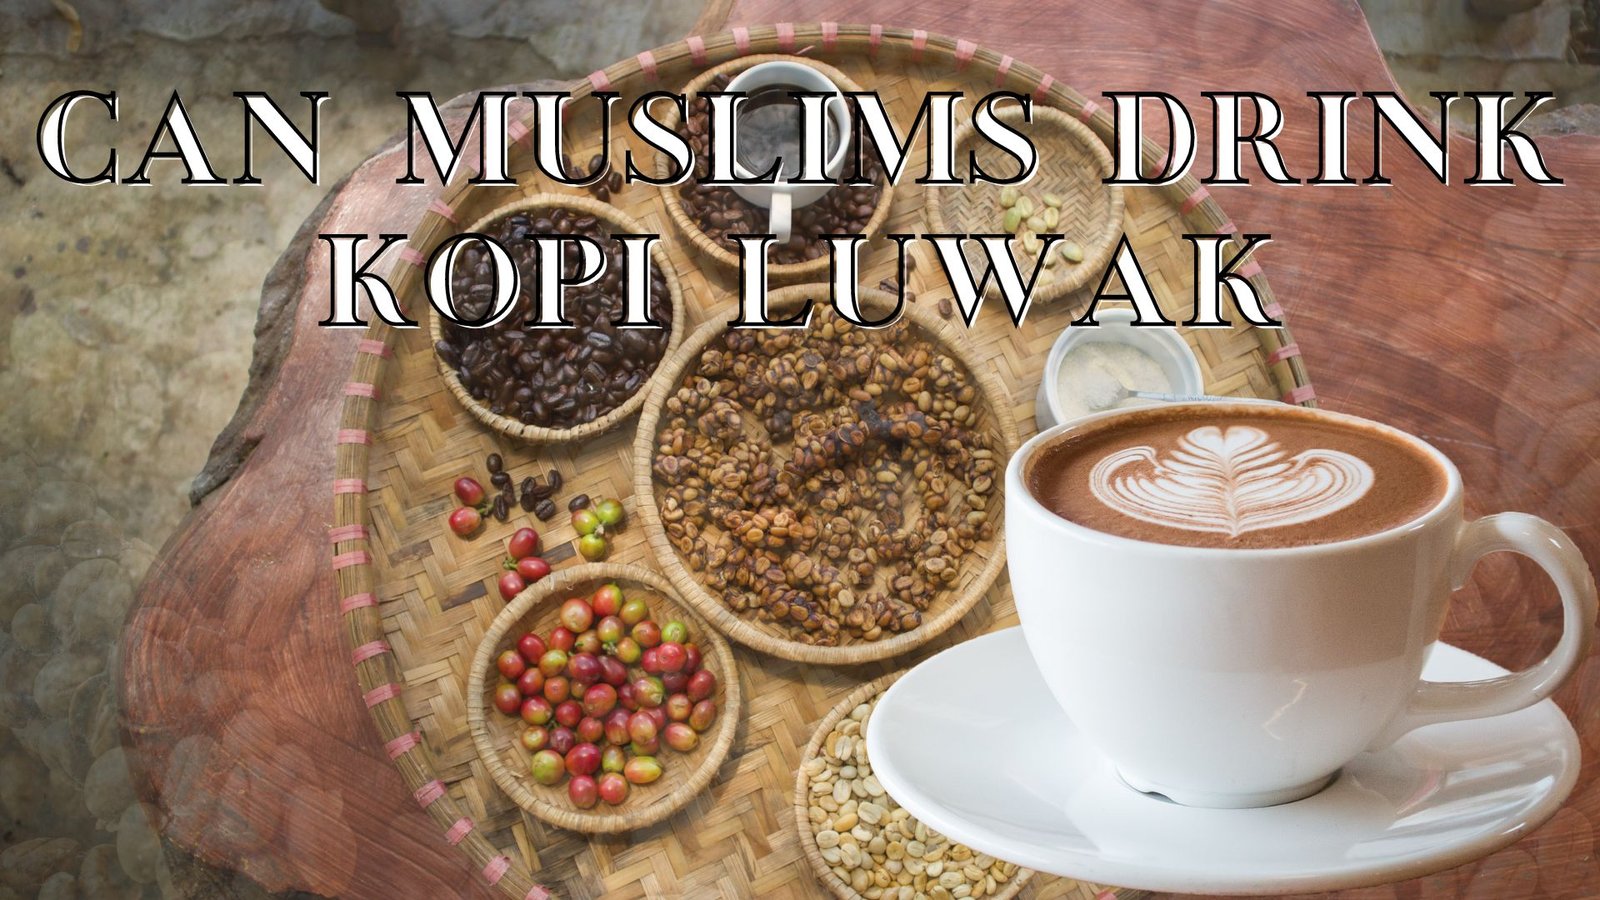 muslim drinks kopi luwak